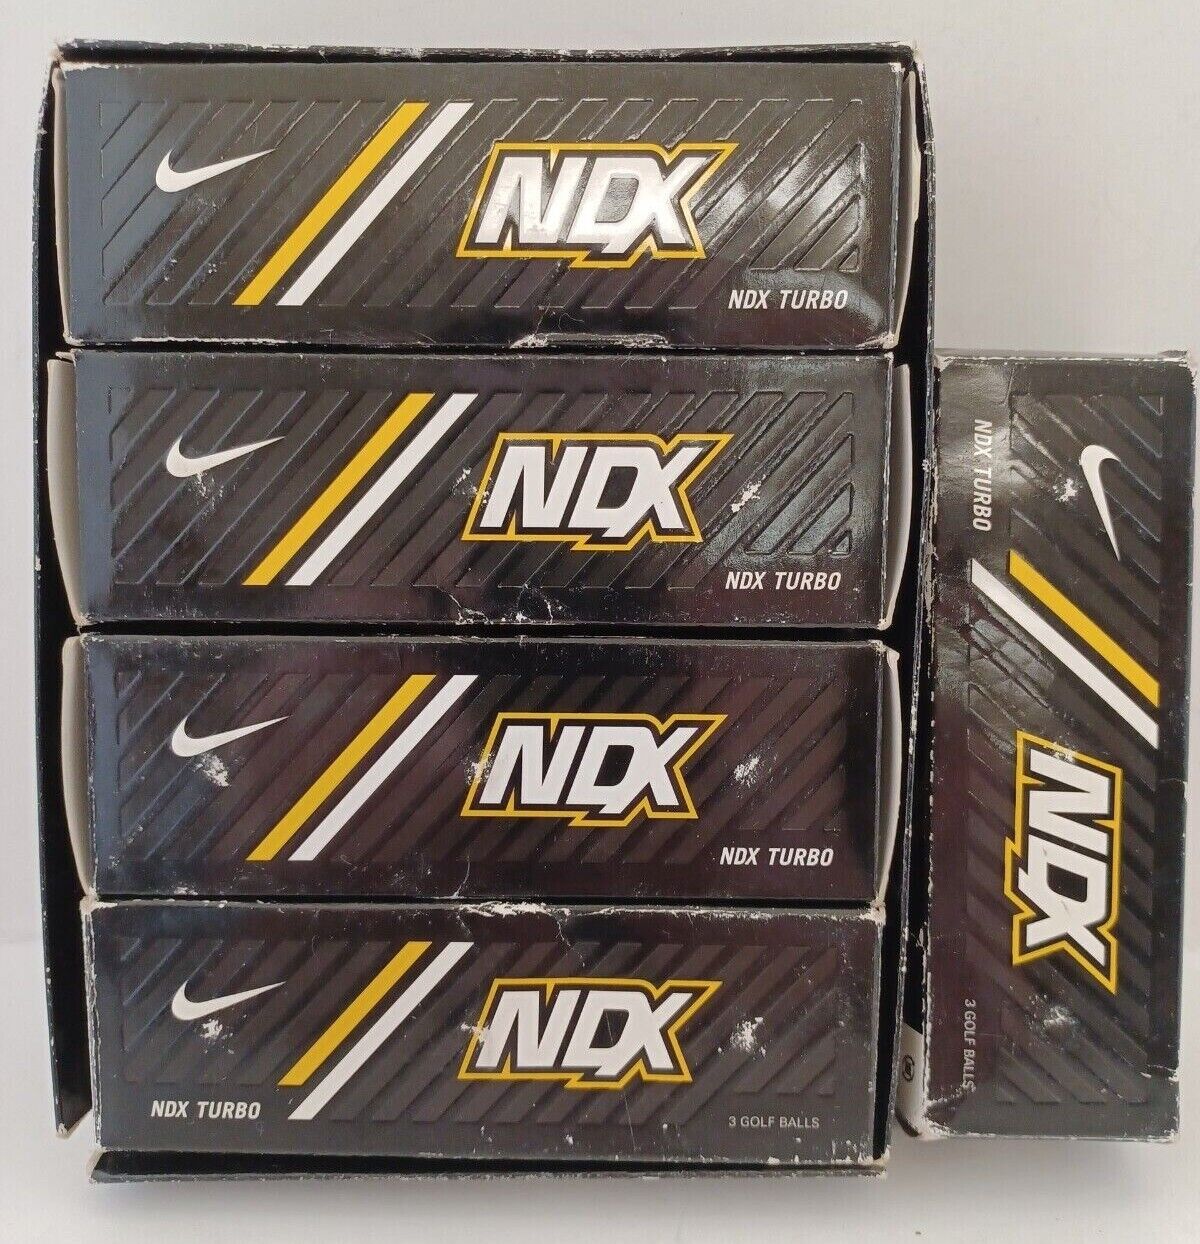 Nike Distance NDX Turbo Nike Distance 5 Sleeves 15 Golf Balls #3, #2, #1 